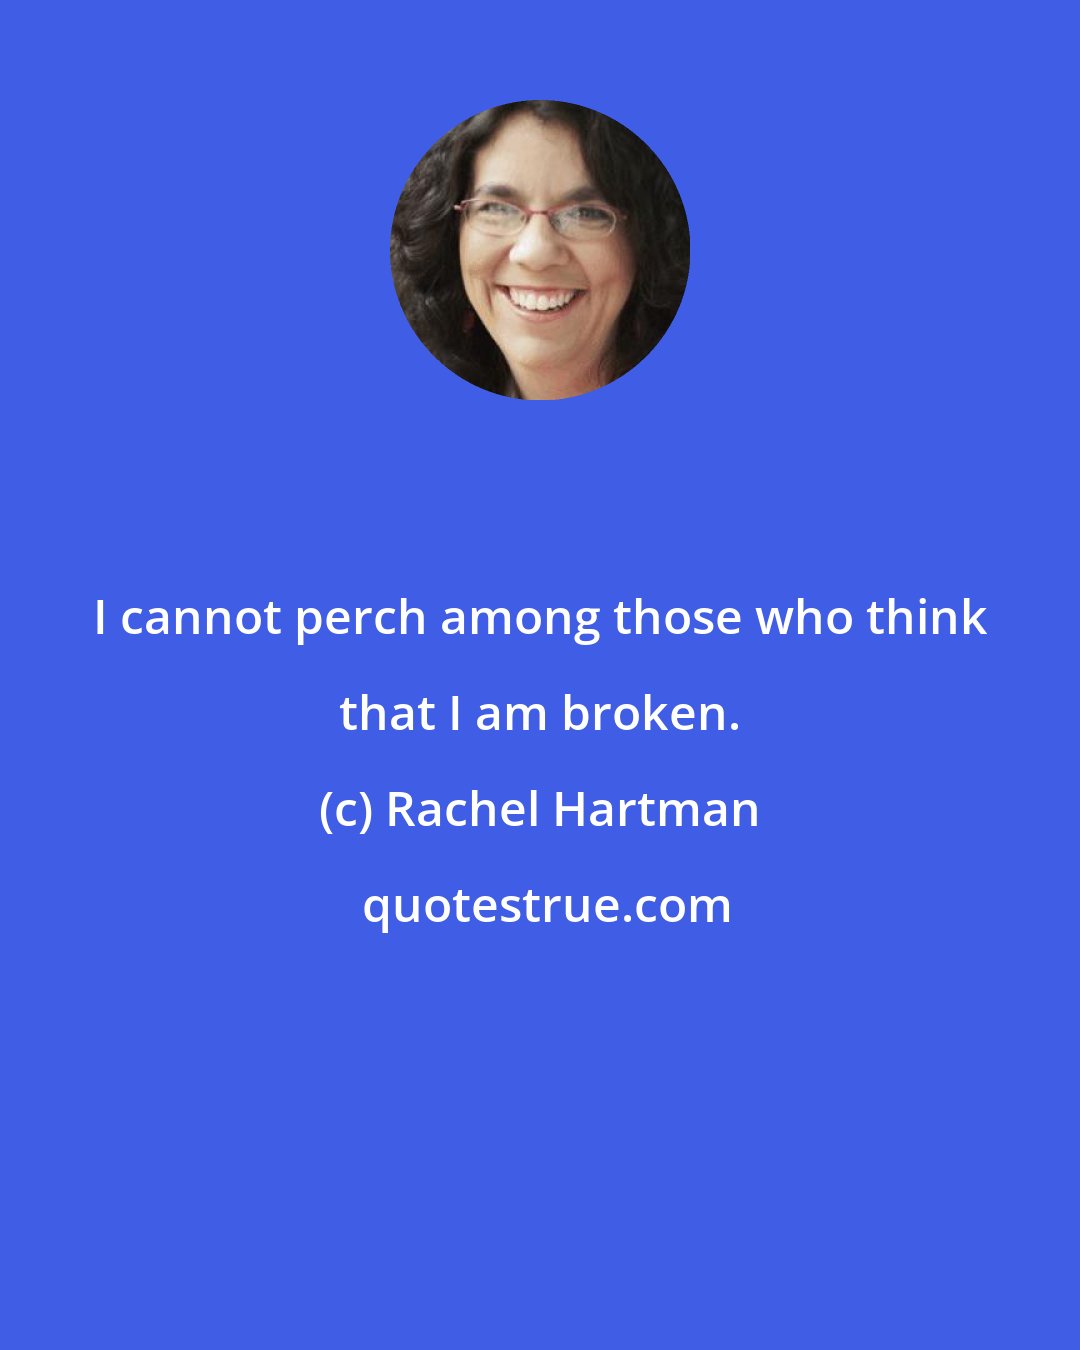 Rachel Hartman: I cannot perch among those who think that I am broken.